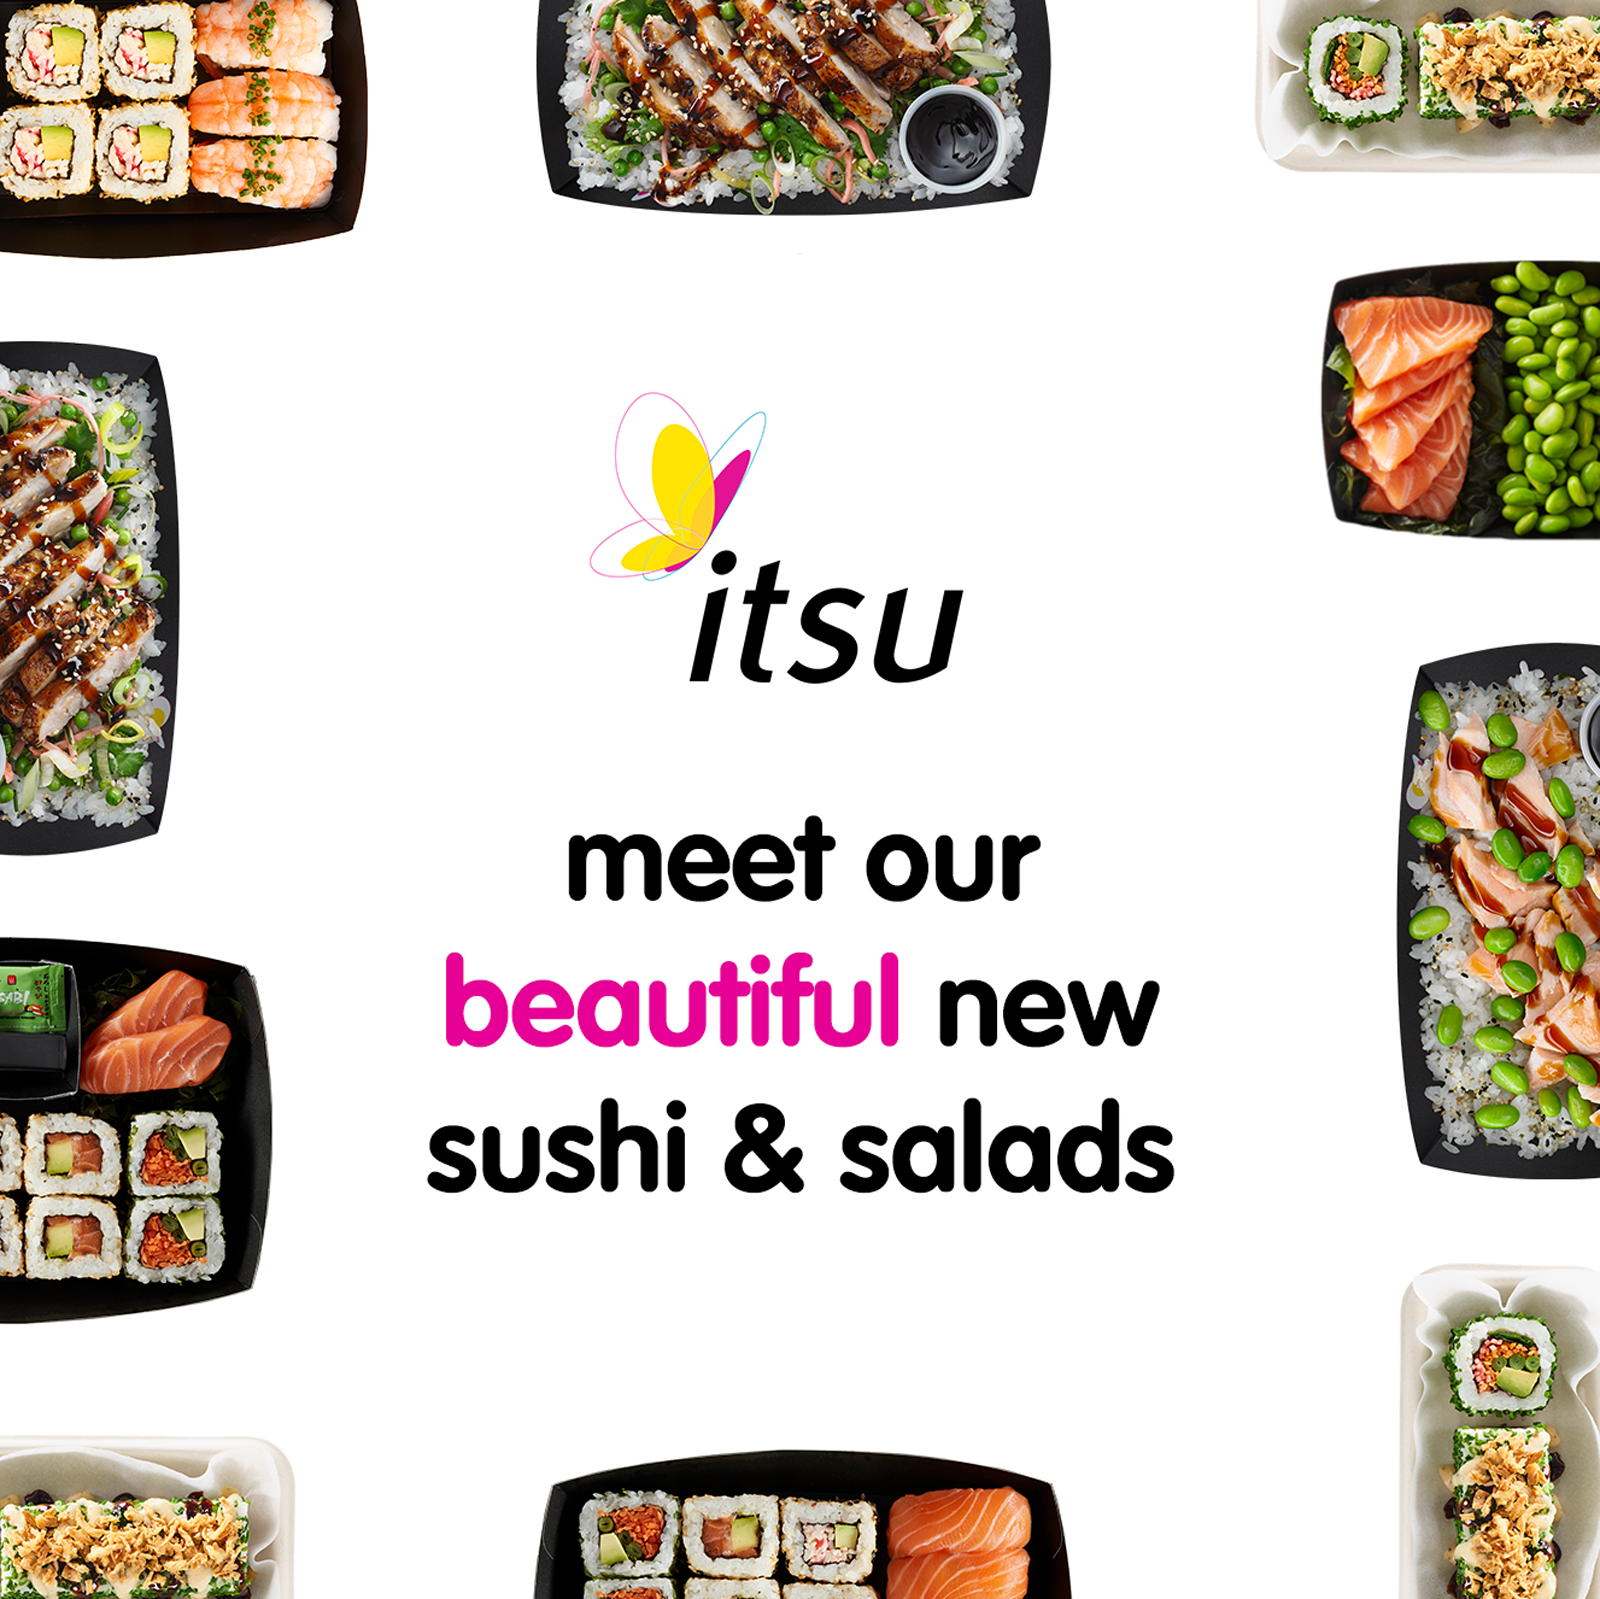 Meet itsu's new beautiful sushi & salads